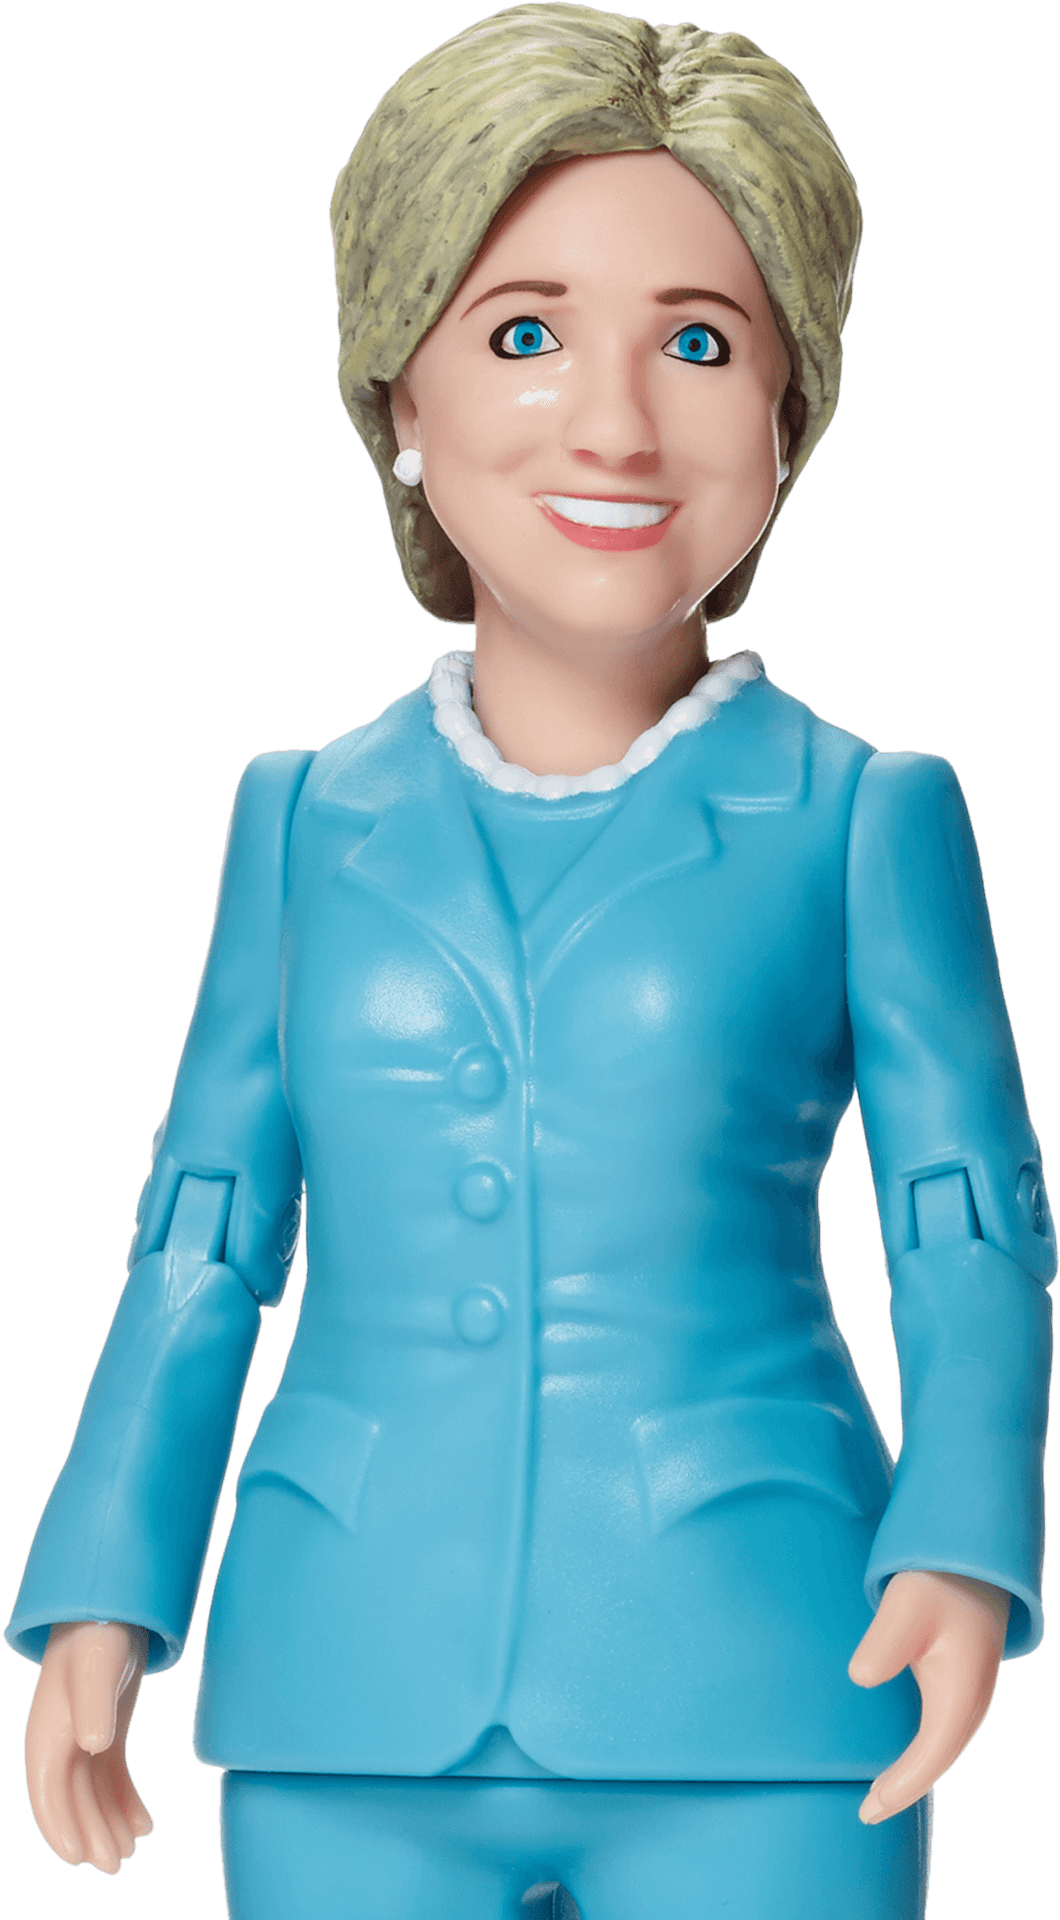 Hillary Clinton Figurine Blue Suit PNG